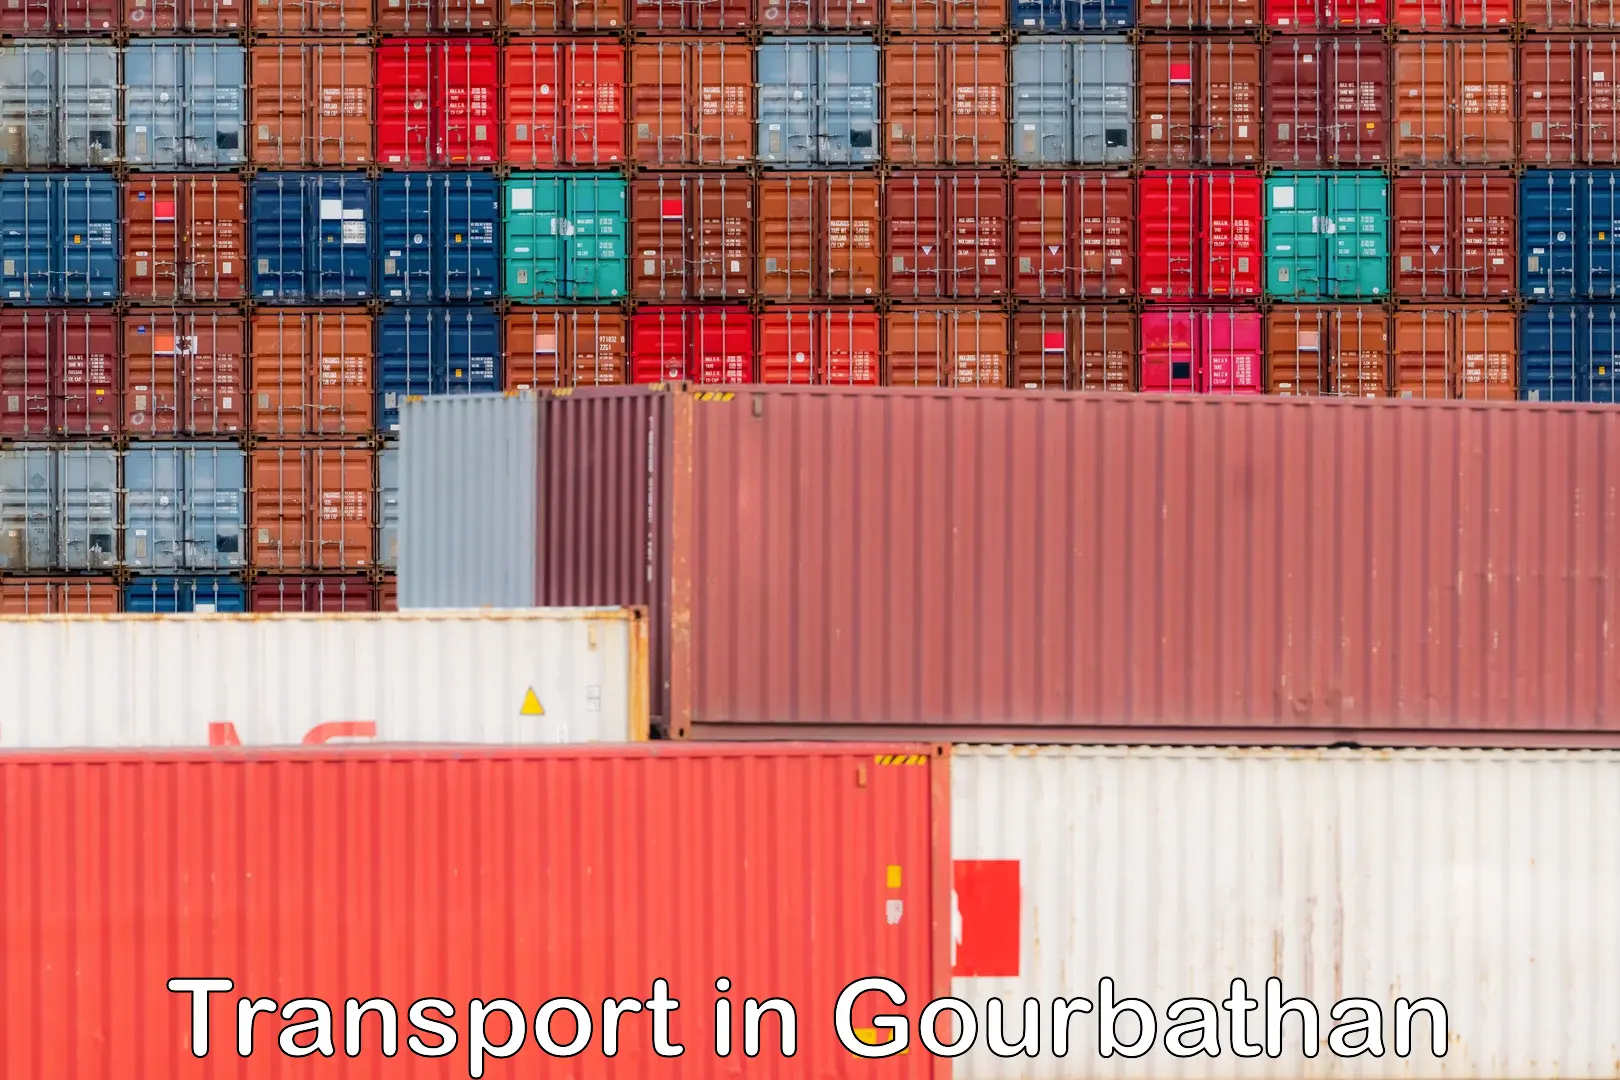 Intercity goods transport in Gourbathan